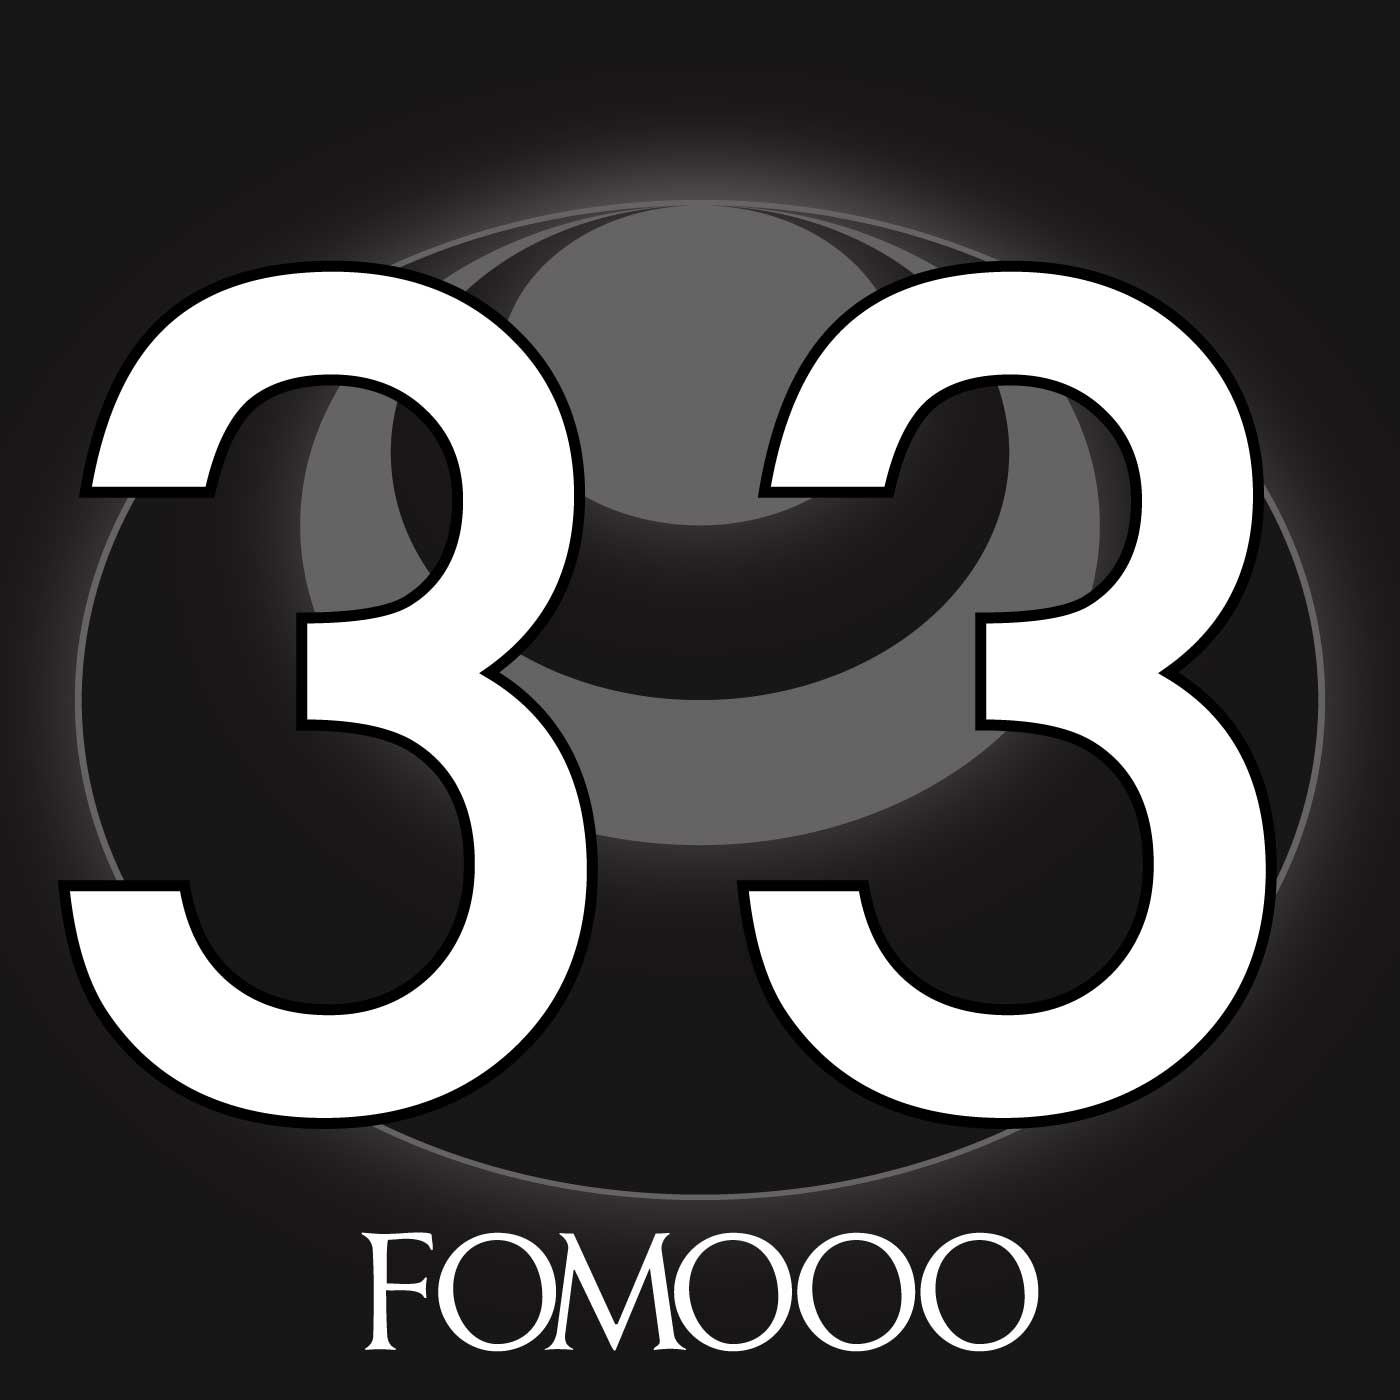 33 – FOMOOO